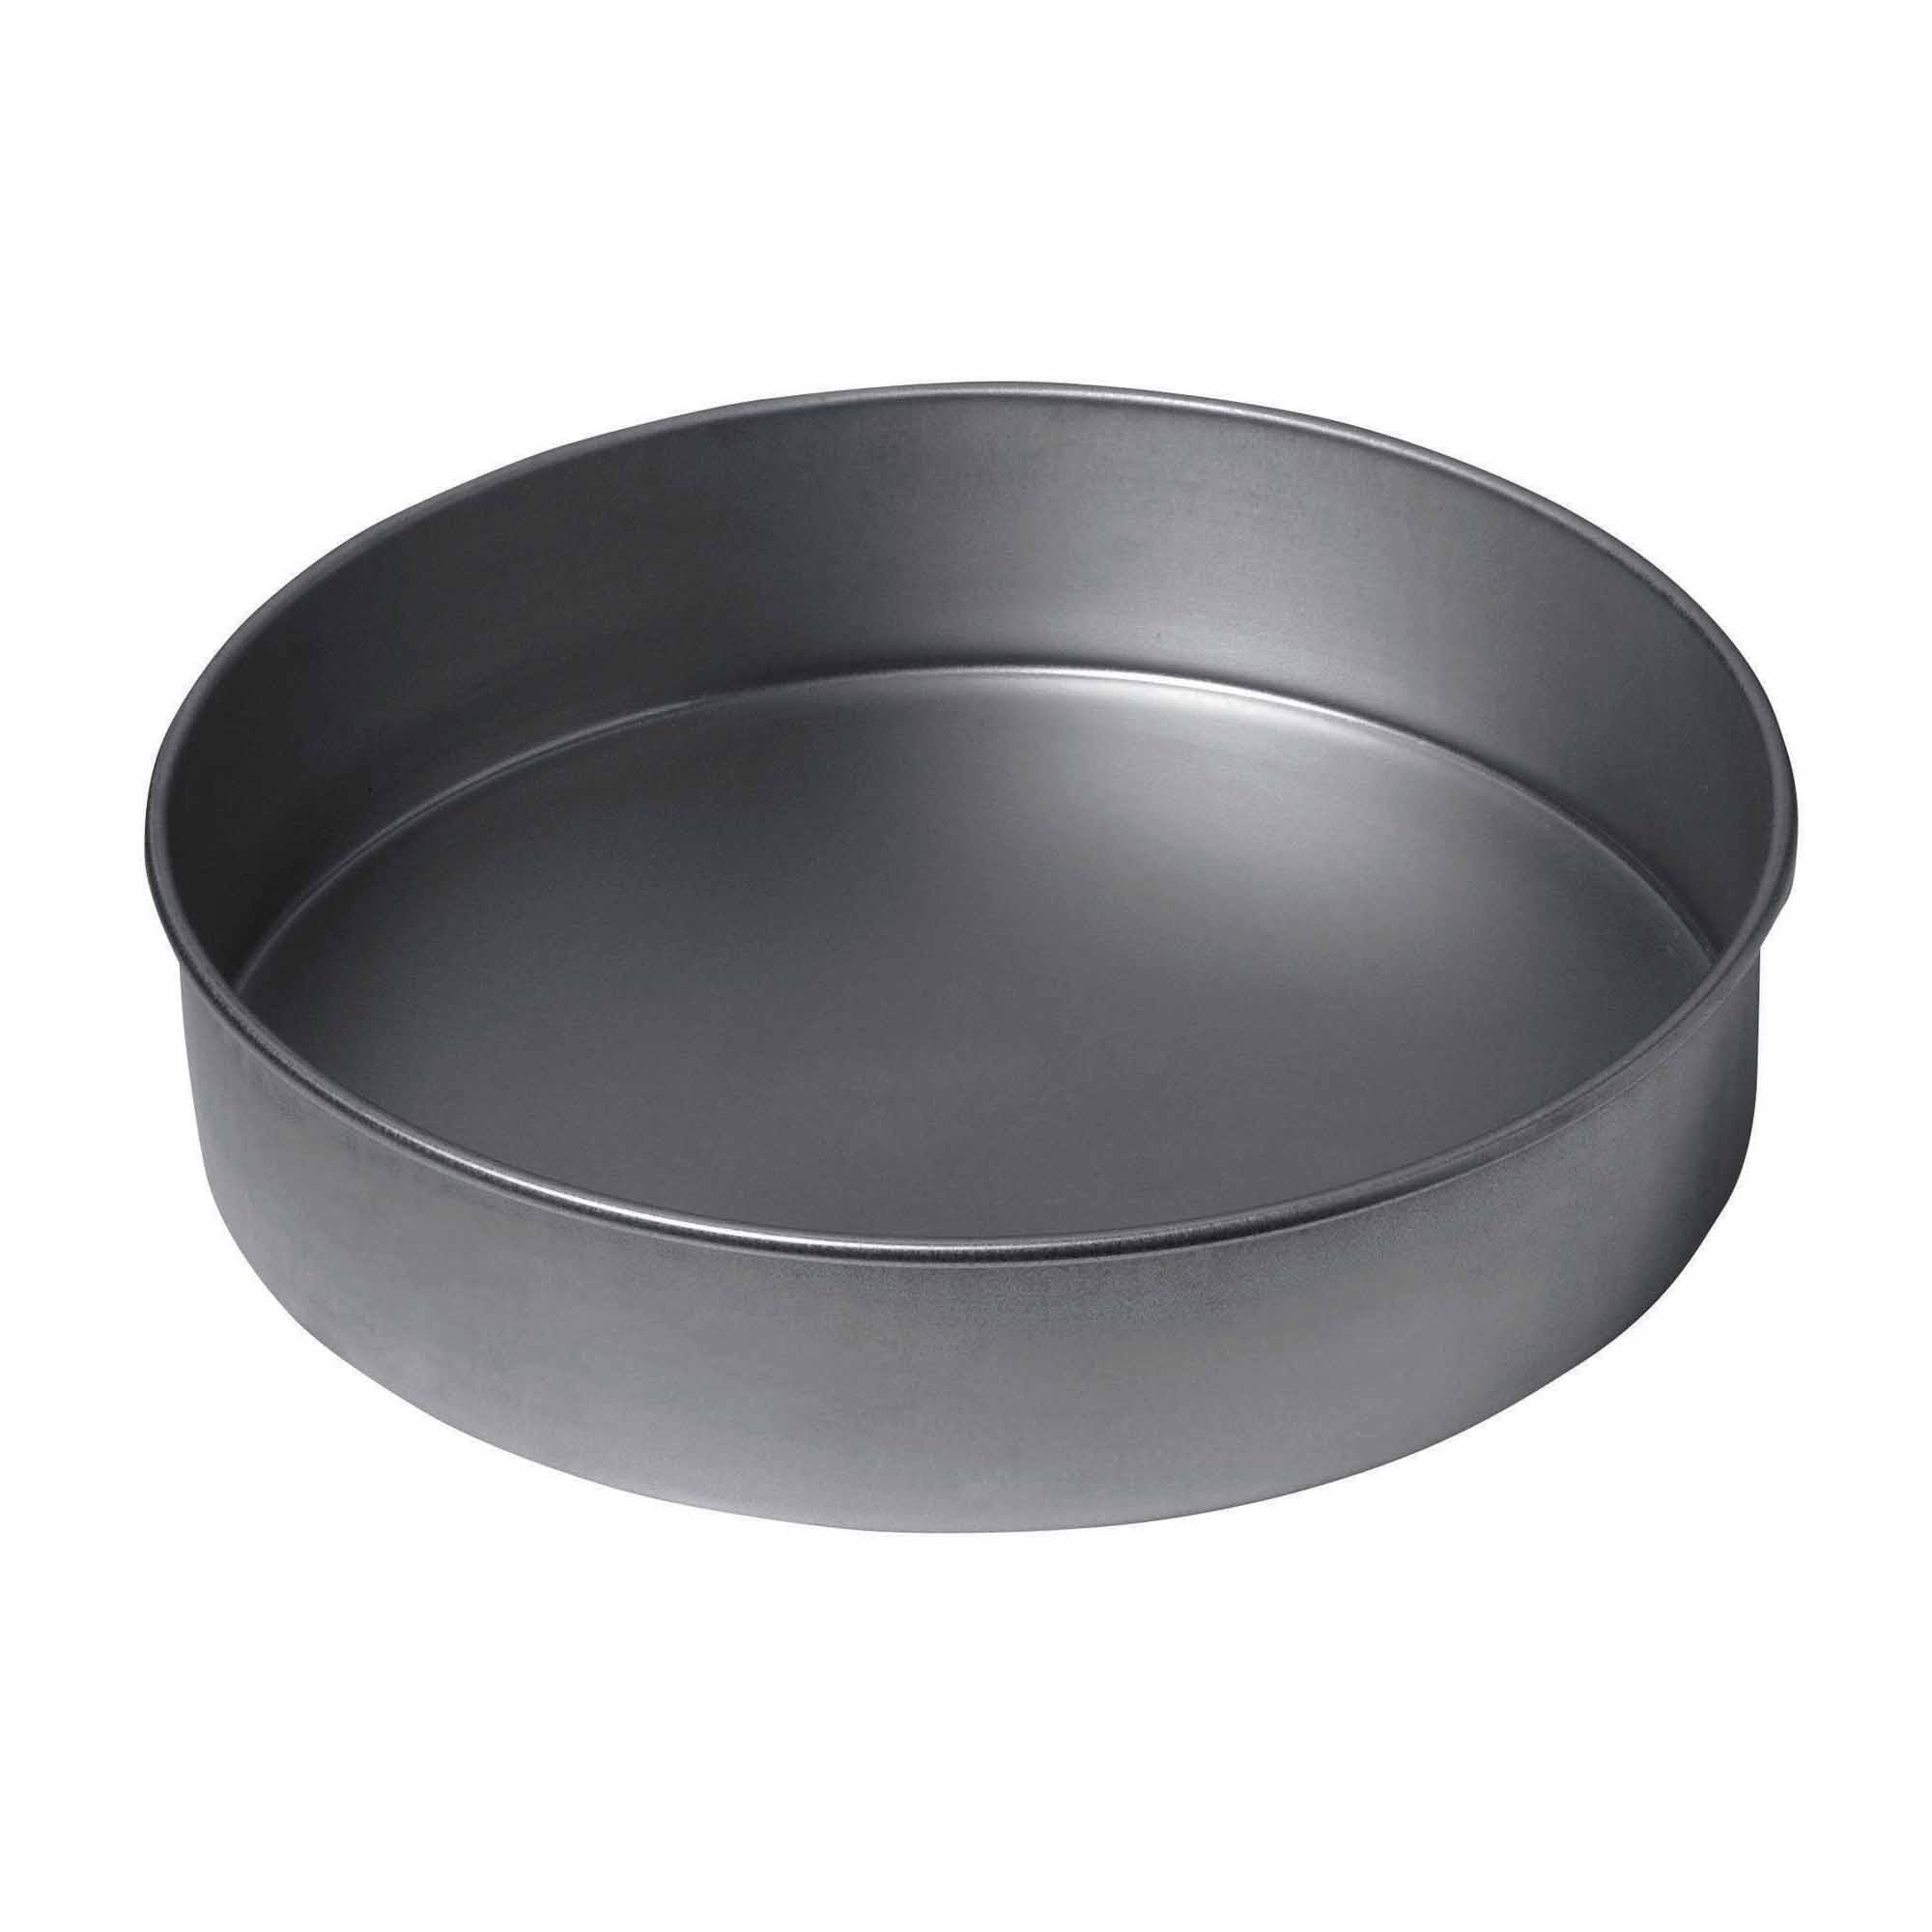 Chicago Metallic Non-Stick 23cm Round Cake Pan - The Cooks Cupboard Ltd